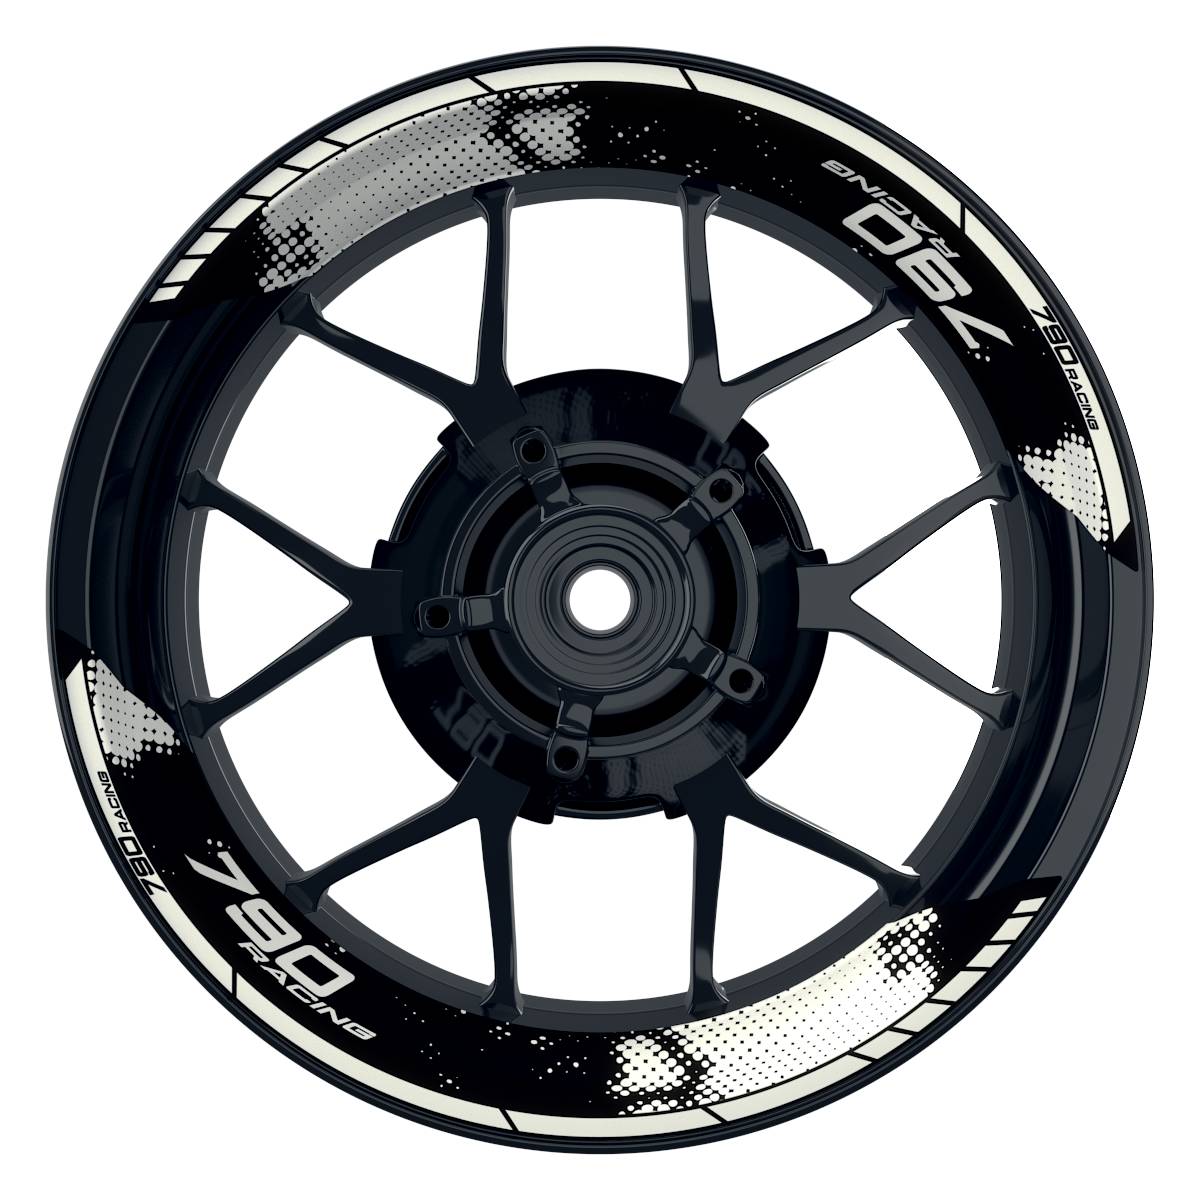 KTM Racing 790 Dots schwarz weiss Frontansicht